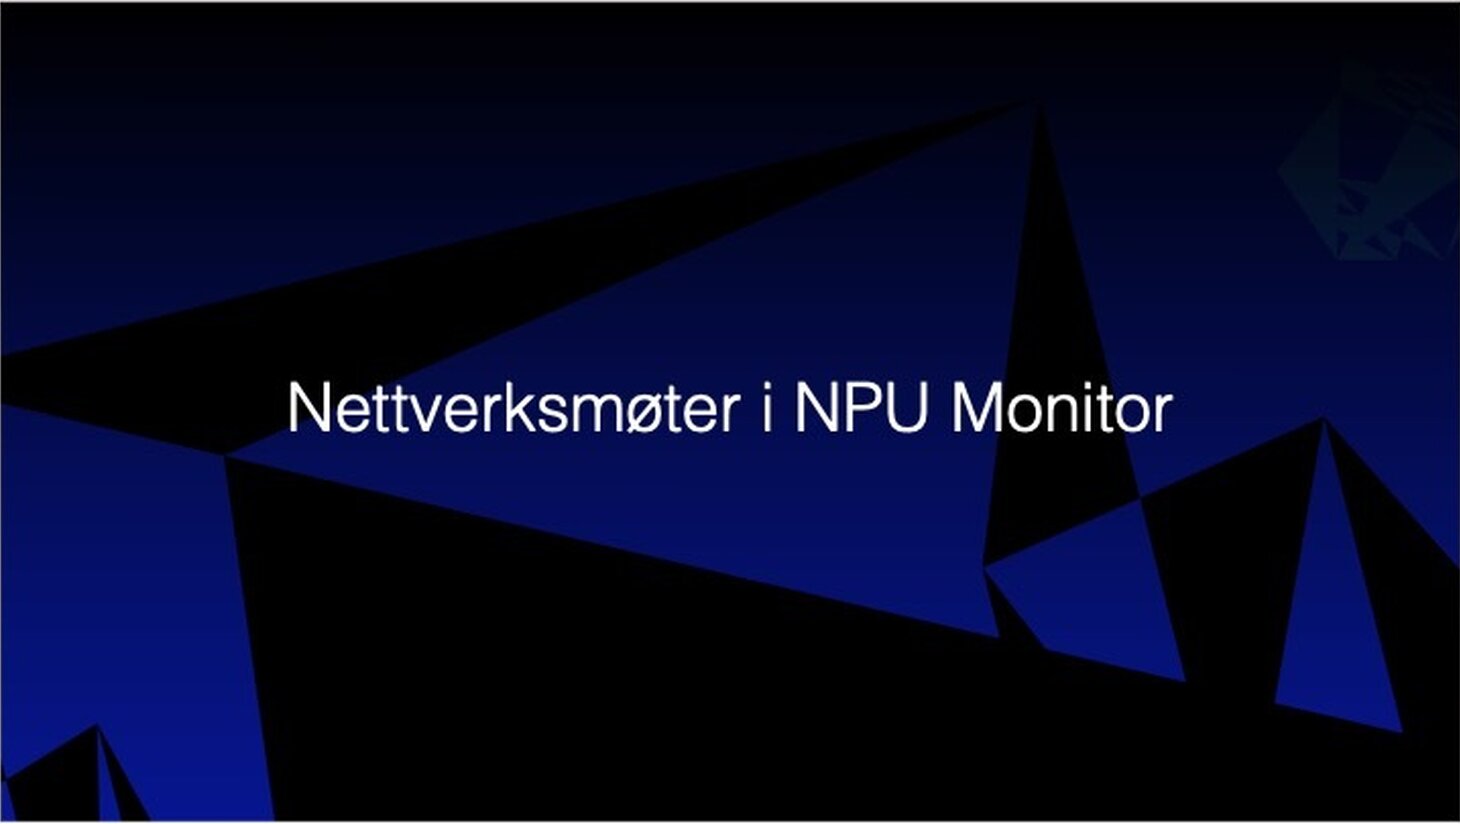 Nettverksmøter i NPU Monitor